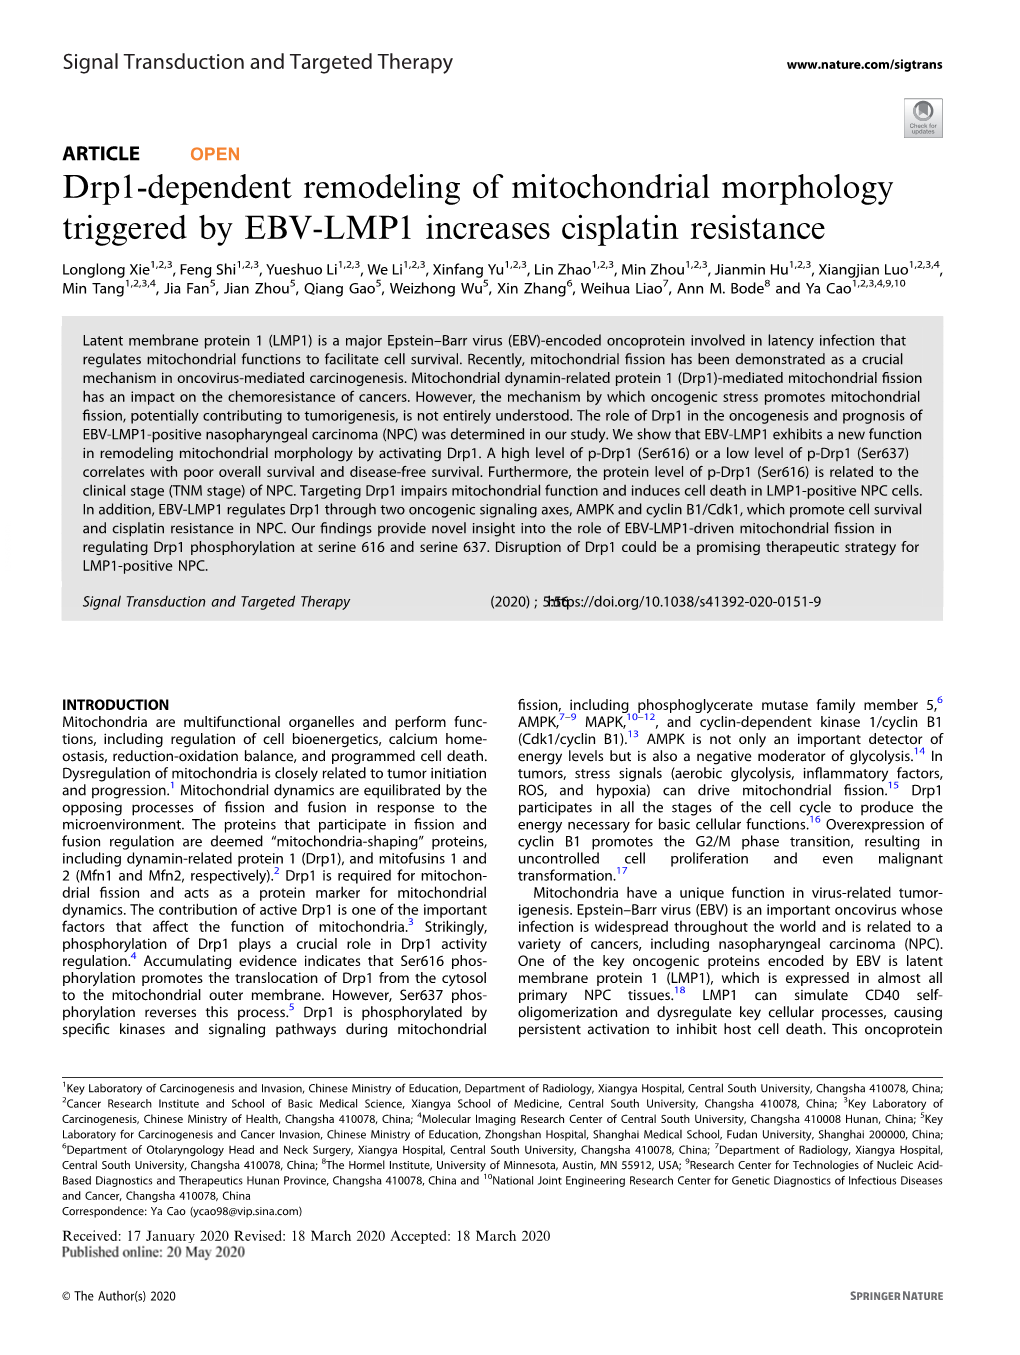 Drp1-Dependent Remodeling of Mitochondrial Morphology Triggered by EBV-LMP1 Increases Cisplatin Resistance